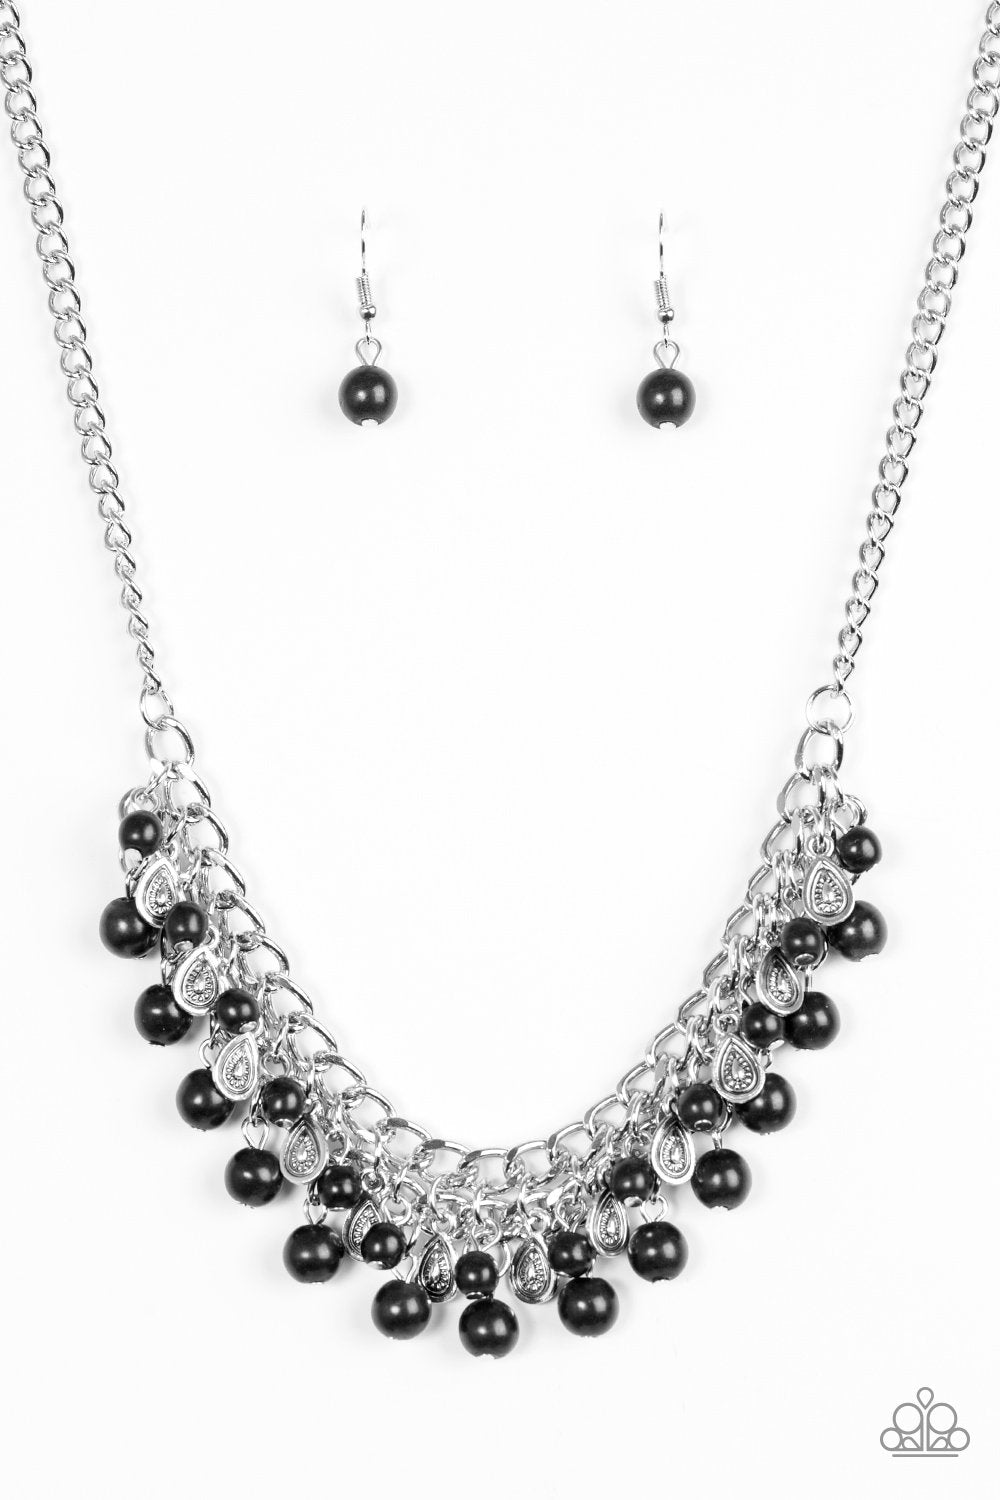 Poshly Paleo Black Necklace - Paparazzi Accessories-CarasShop.com - $5 Jewelry by Cara Jewels